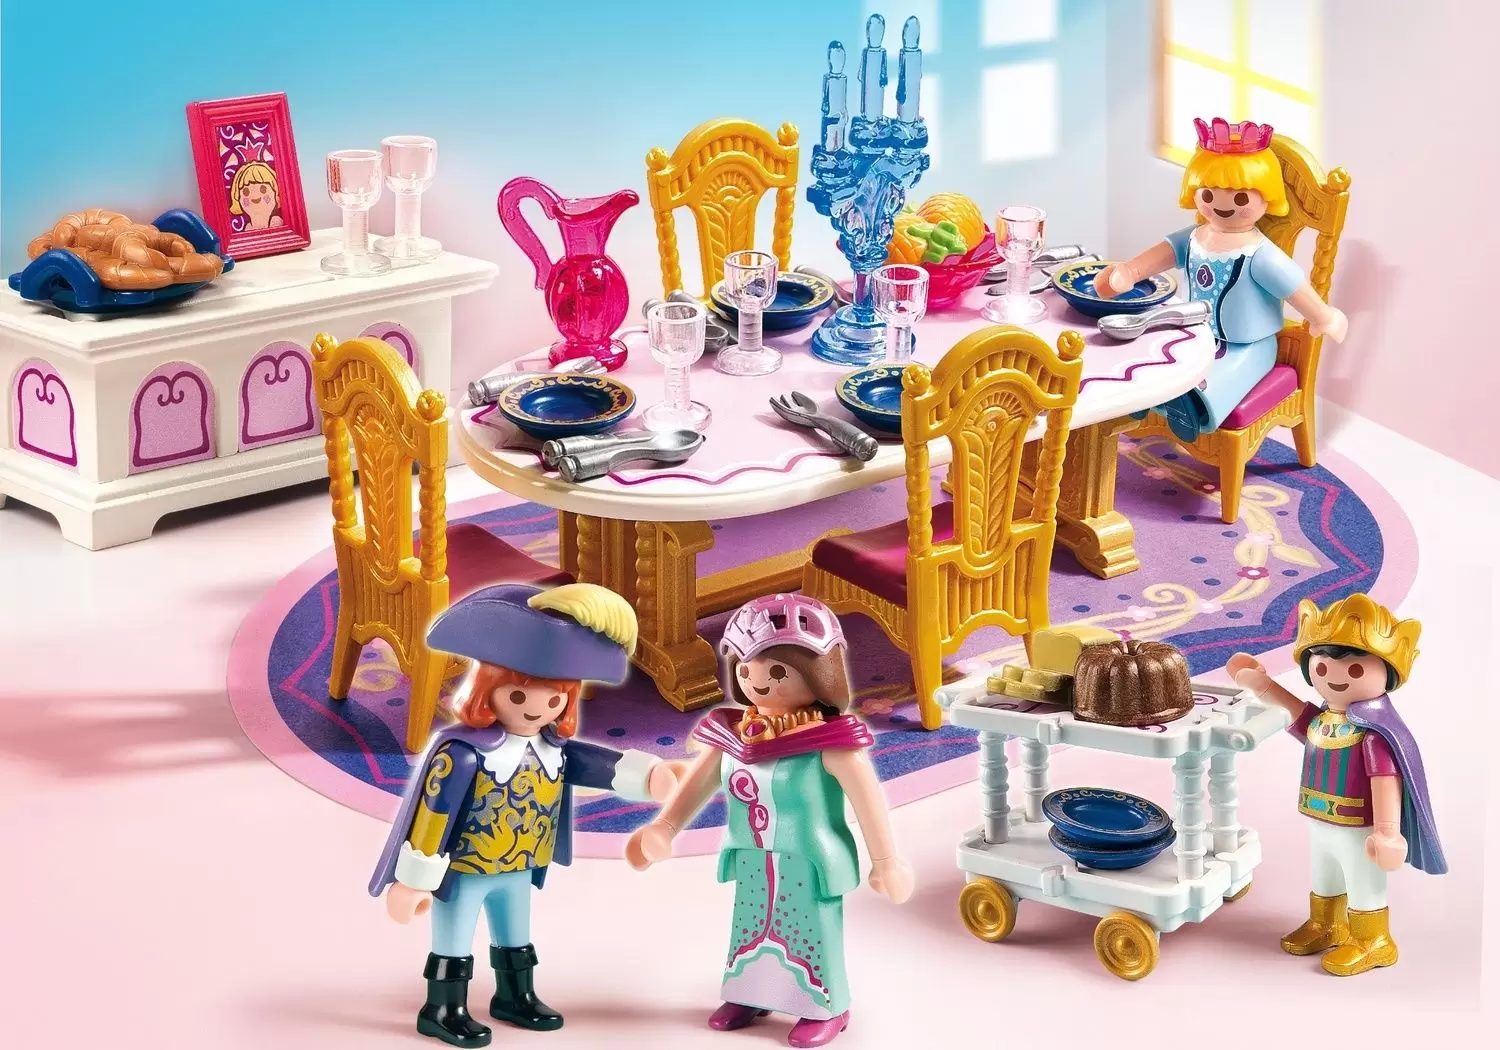 Playmobil Princess 5147 Salle de bains royale - Playmobil - Achat & prix